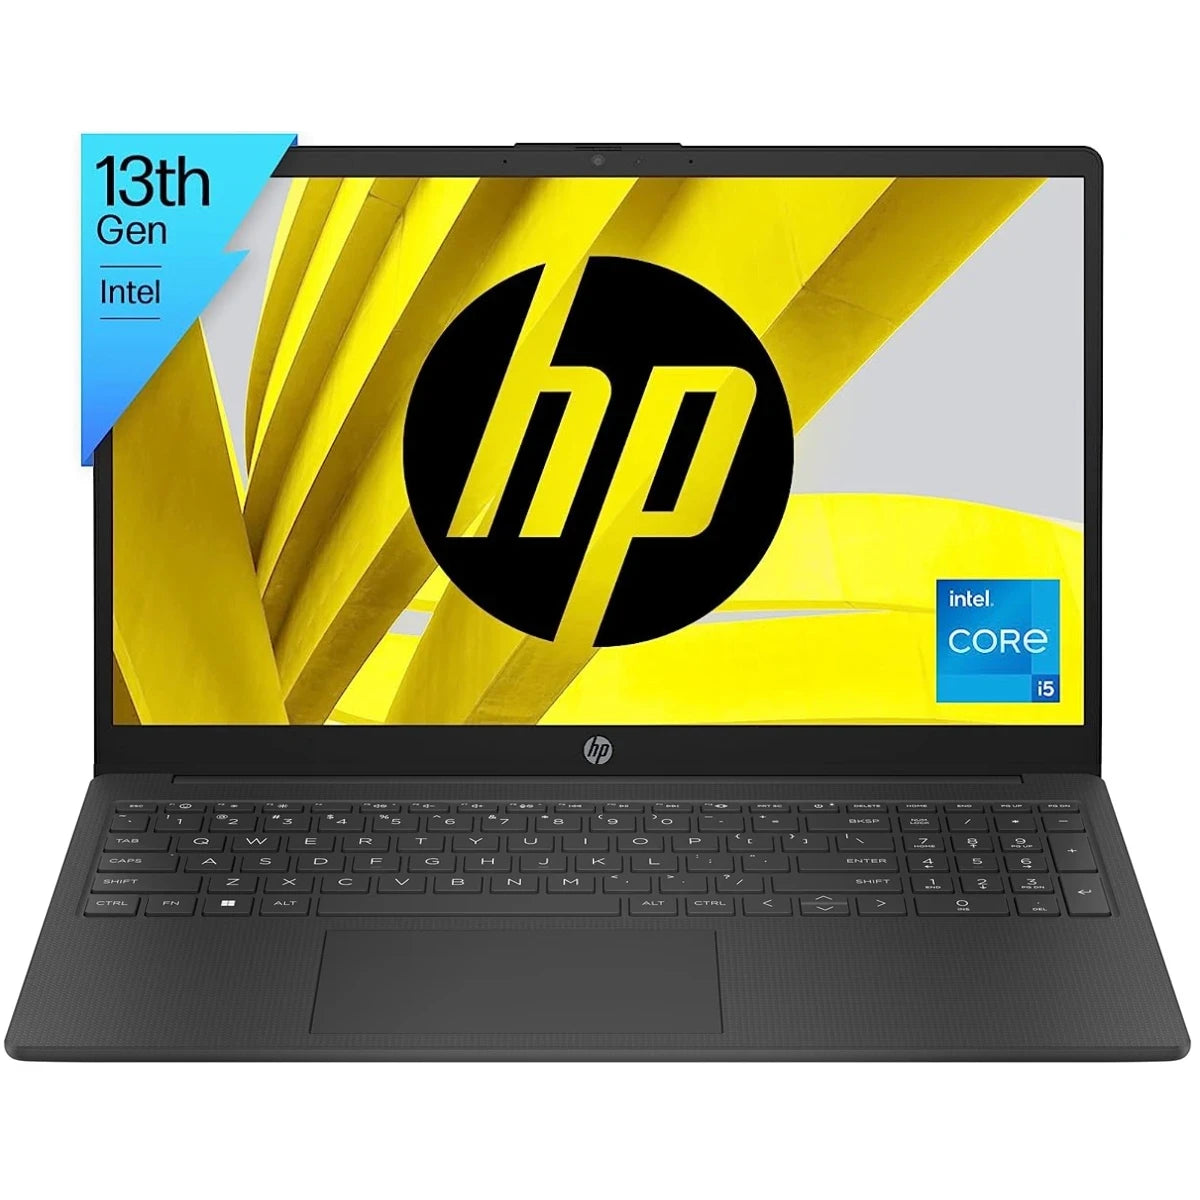 HP Laptop 15-fd0028ne (2023) NEW 13th Gen Intel Core i5 10-Cores Slim Design w/ IPS Full HD Display - Gray